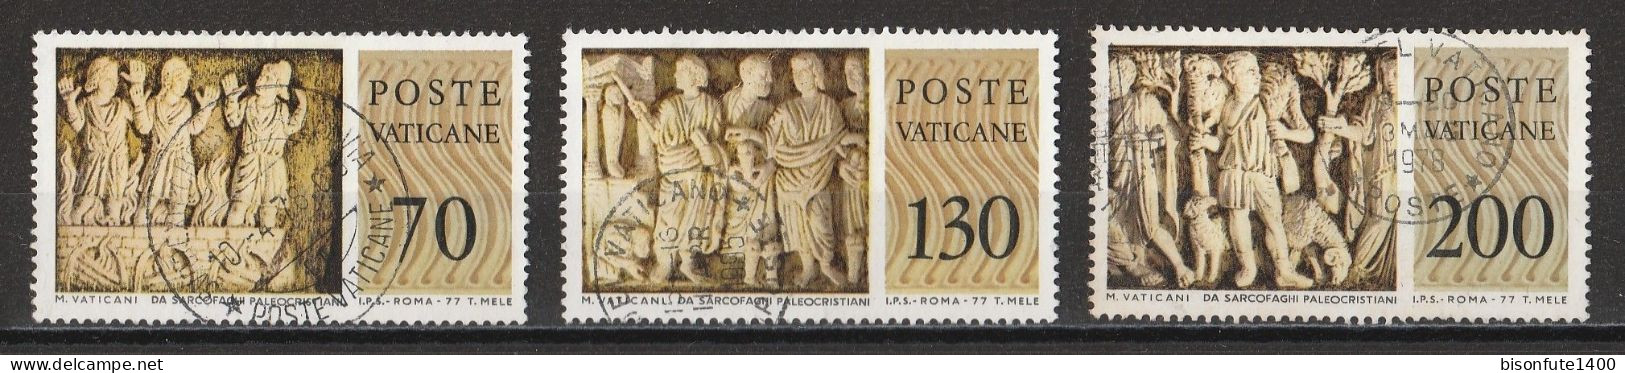 Vatican 1977 : Timbres Yvert & Tellier N° 636 - 638 - 642 - 643 - 646 - 648 Et 649 Oblitérés. - Used Stamps